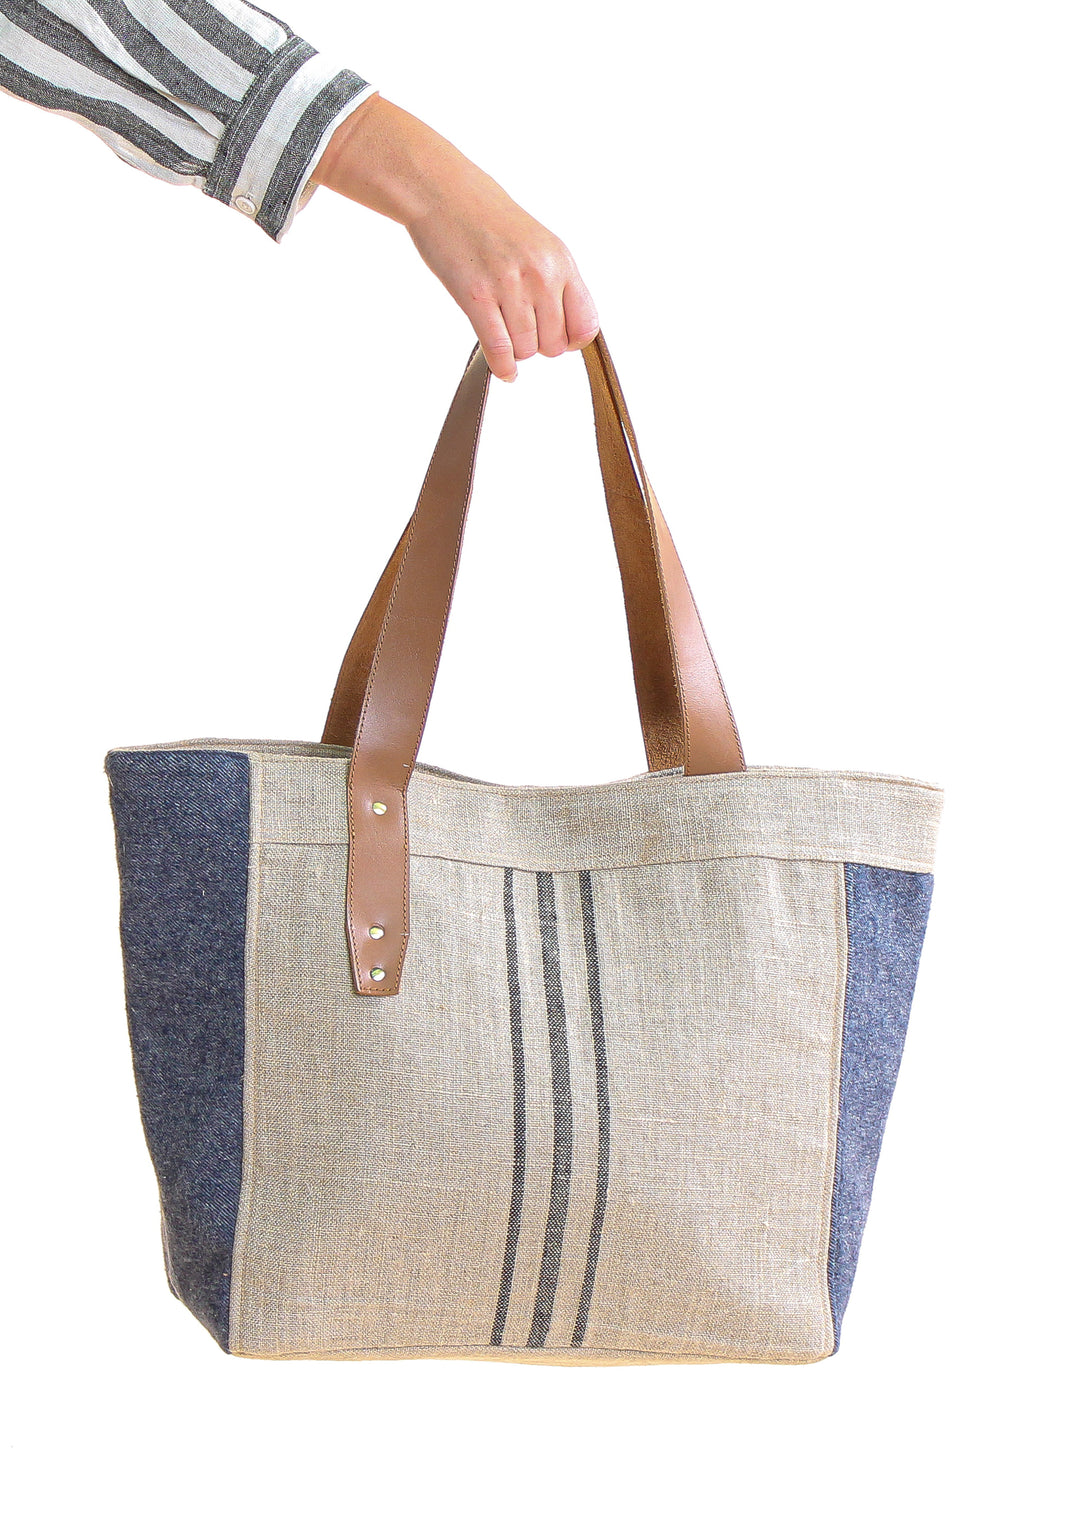 Tahlia Shopper Bag - Imagine Fashion